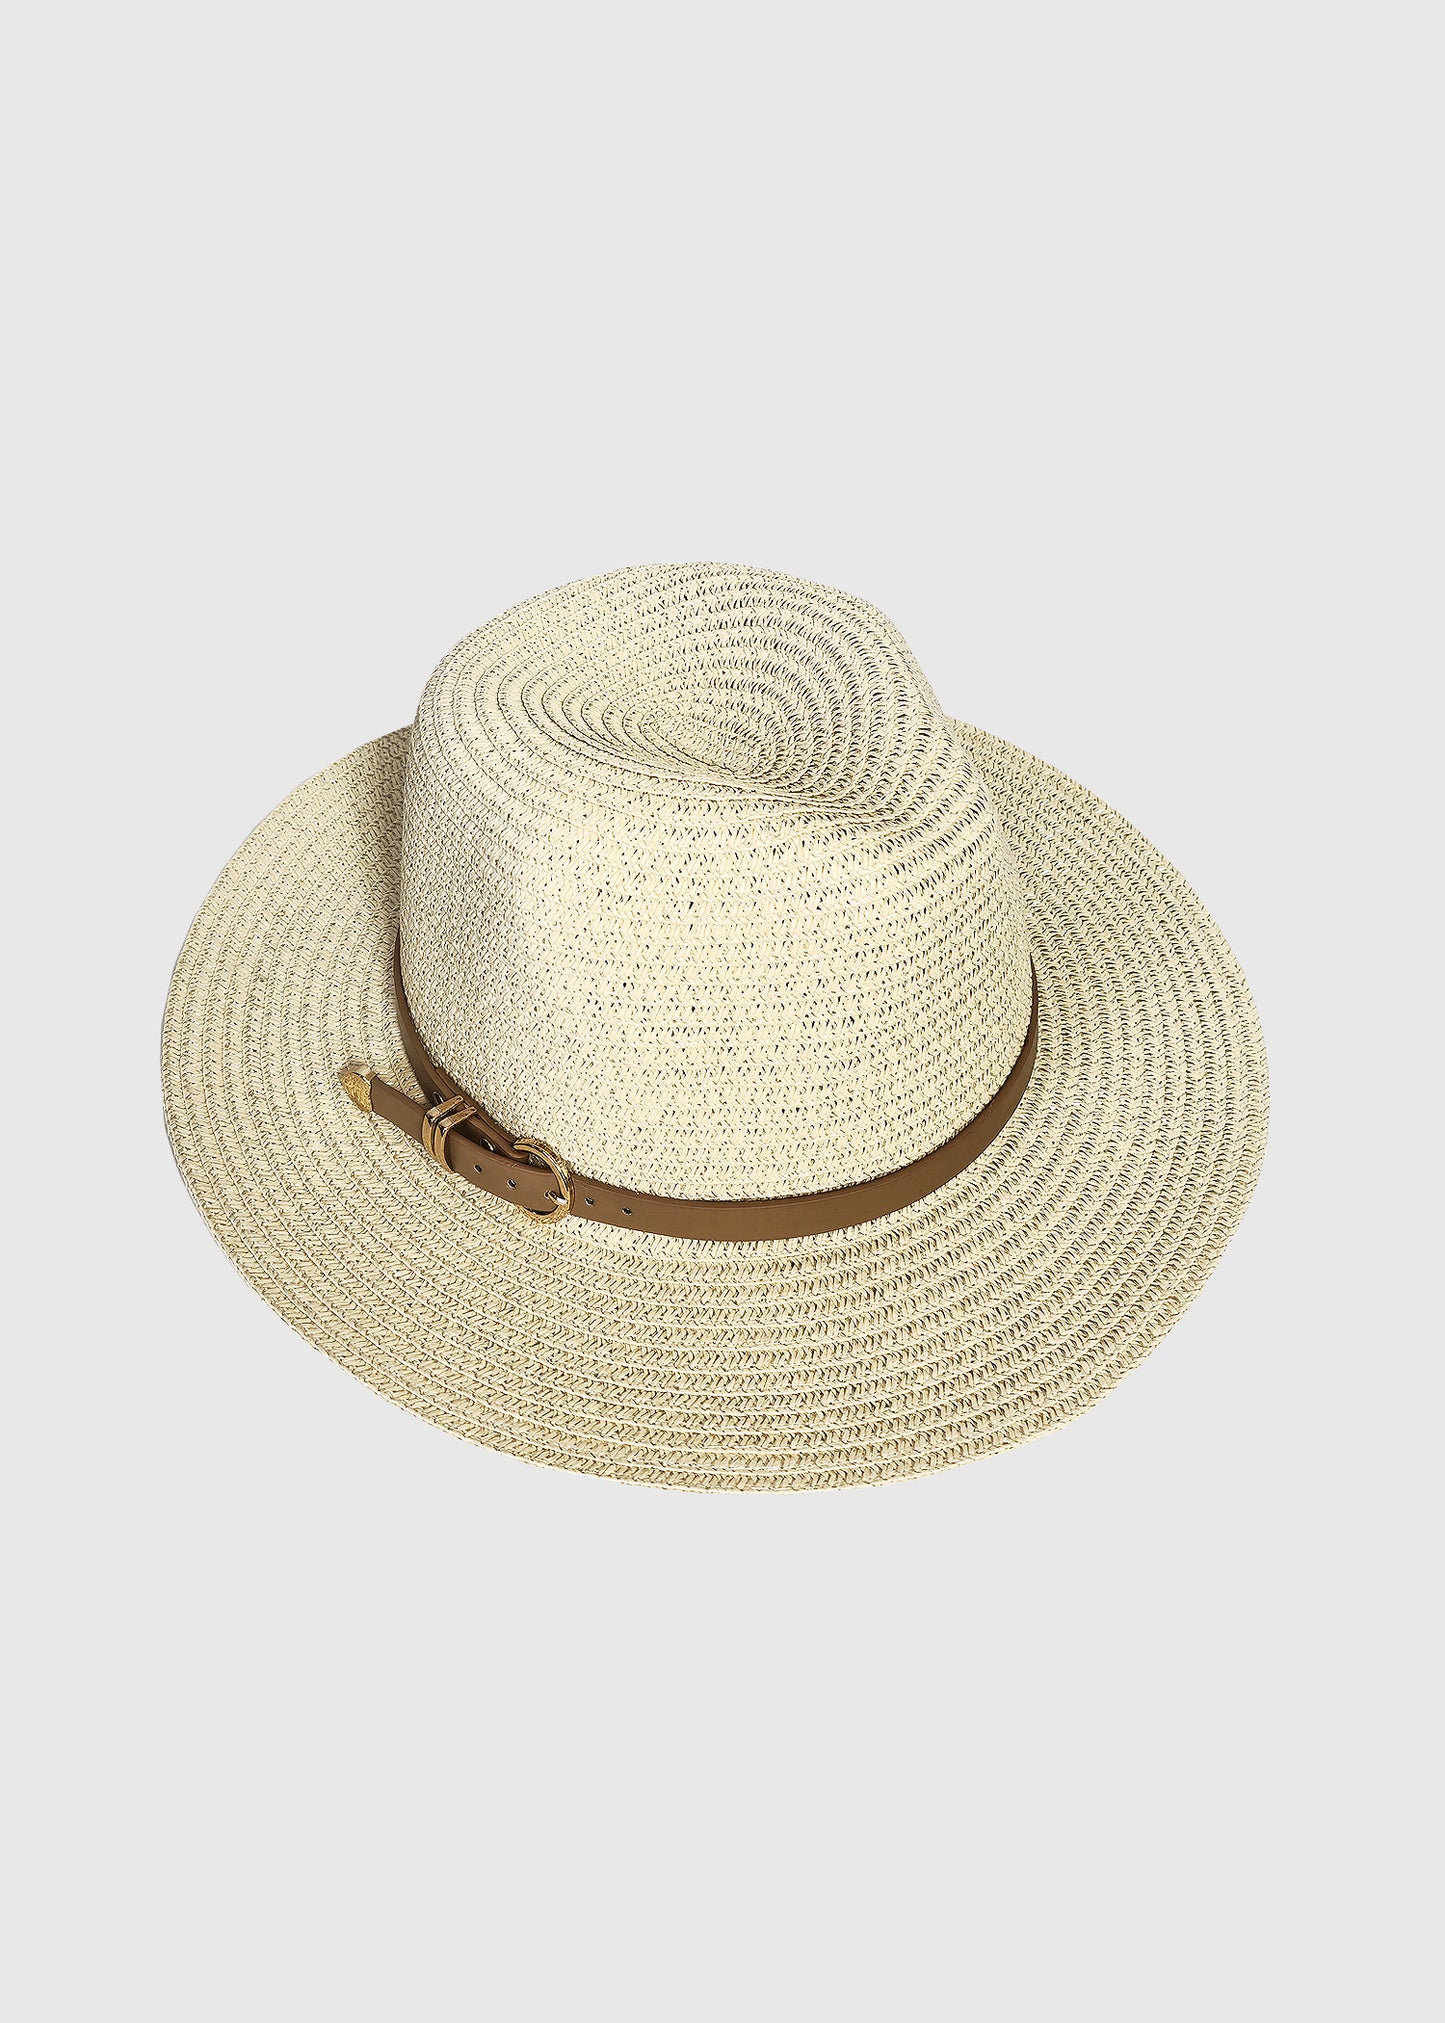 Belt Decor Straw Hat